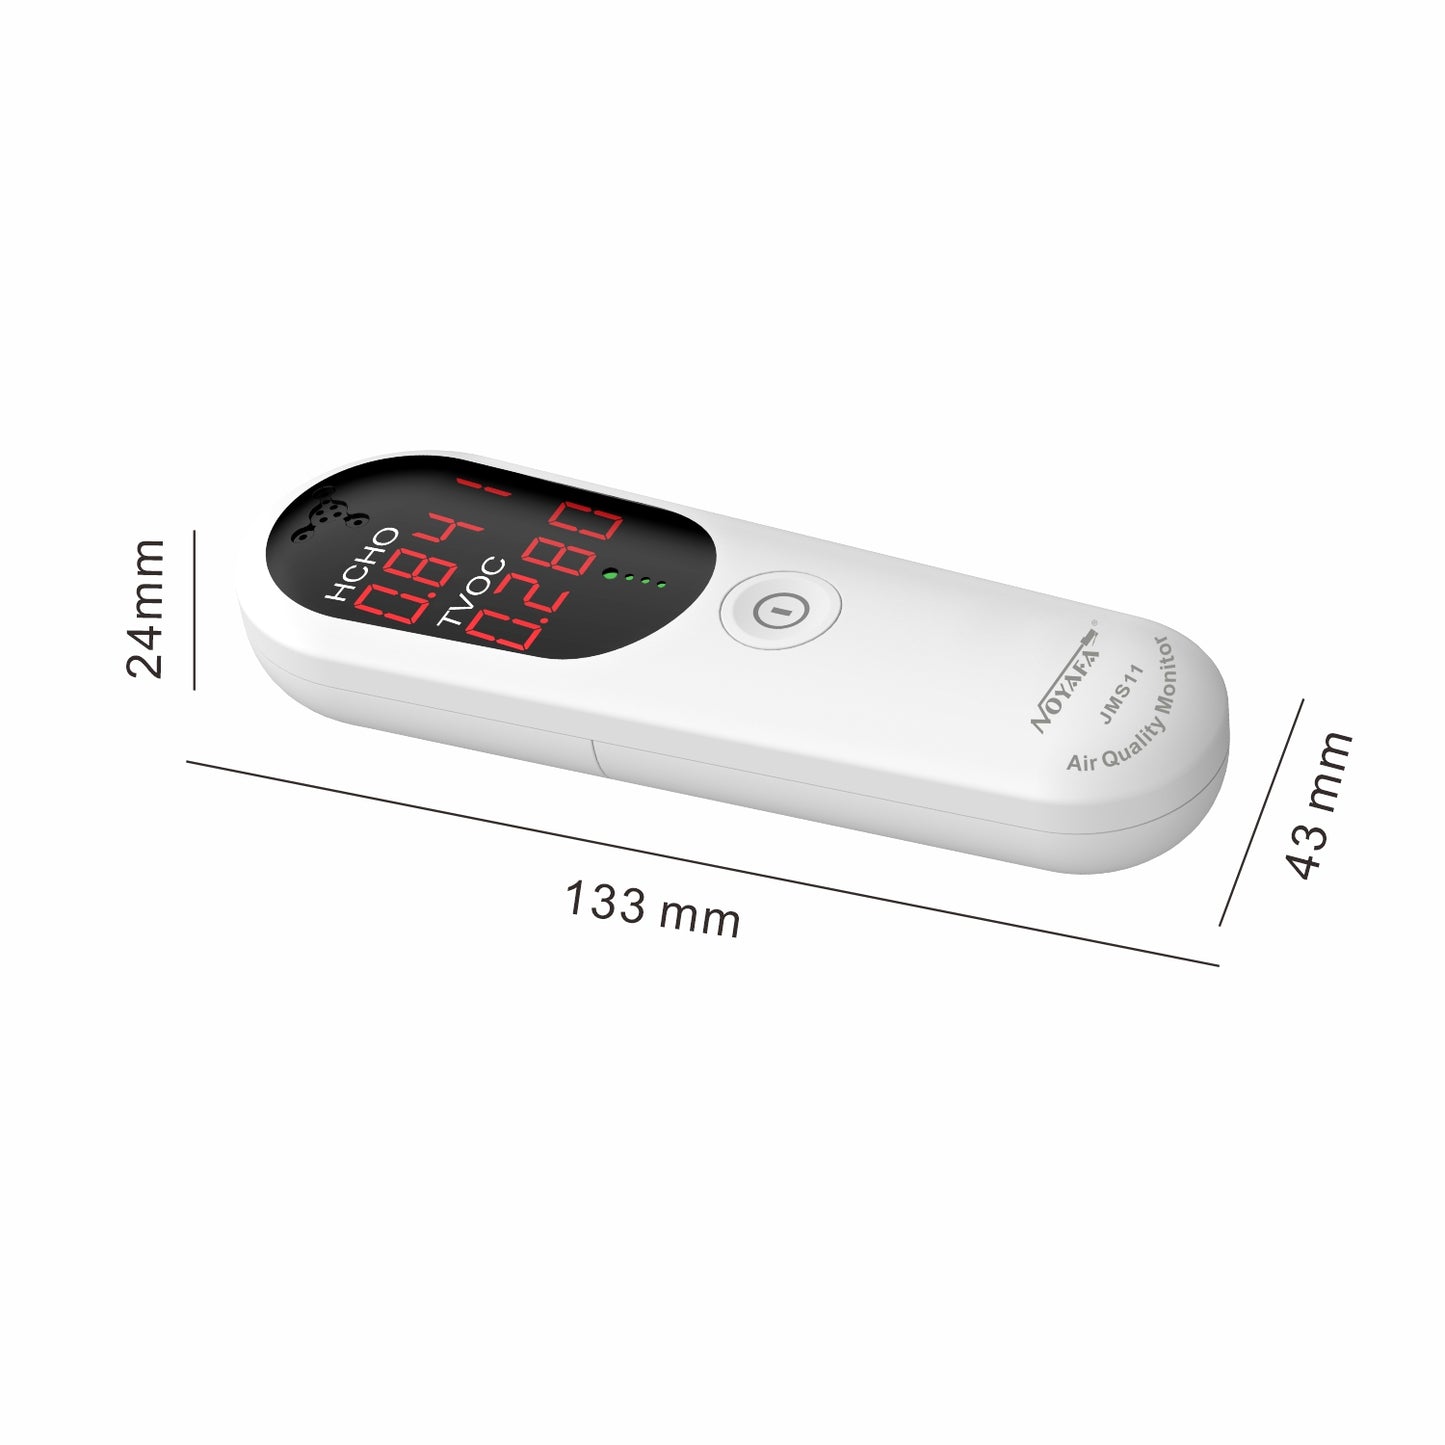 Noyafa JMS11 Digital Air Quality Tester TVOC HCHO Detector Meter Portable Sensor with Sound Alarm, LCD Display Monitor